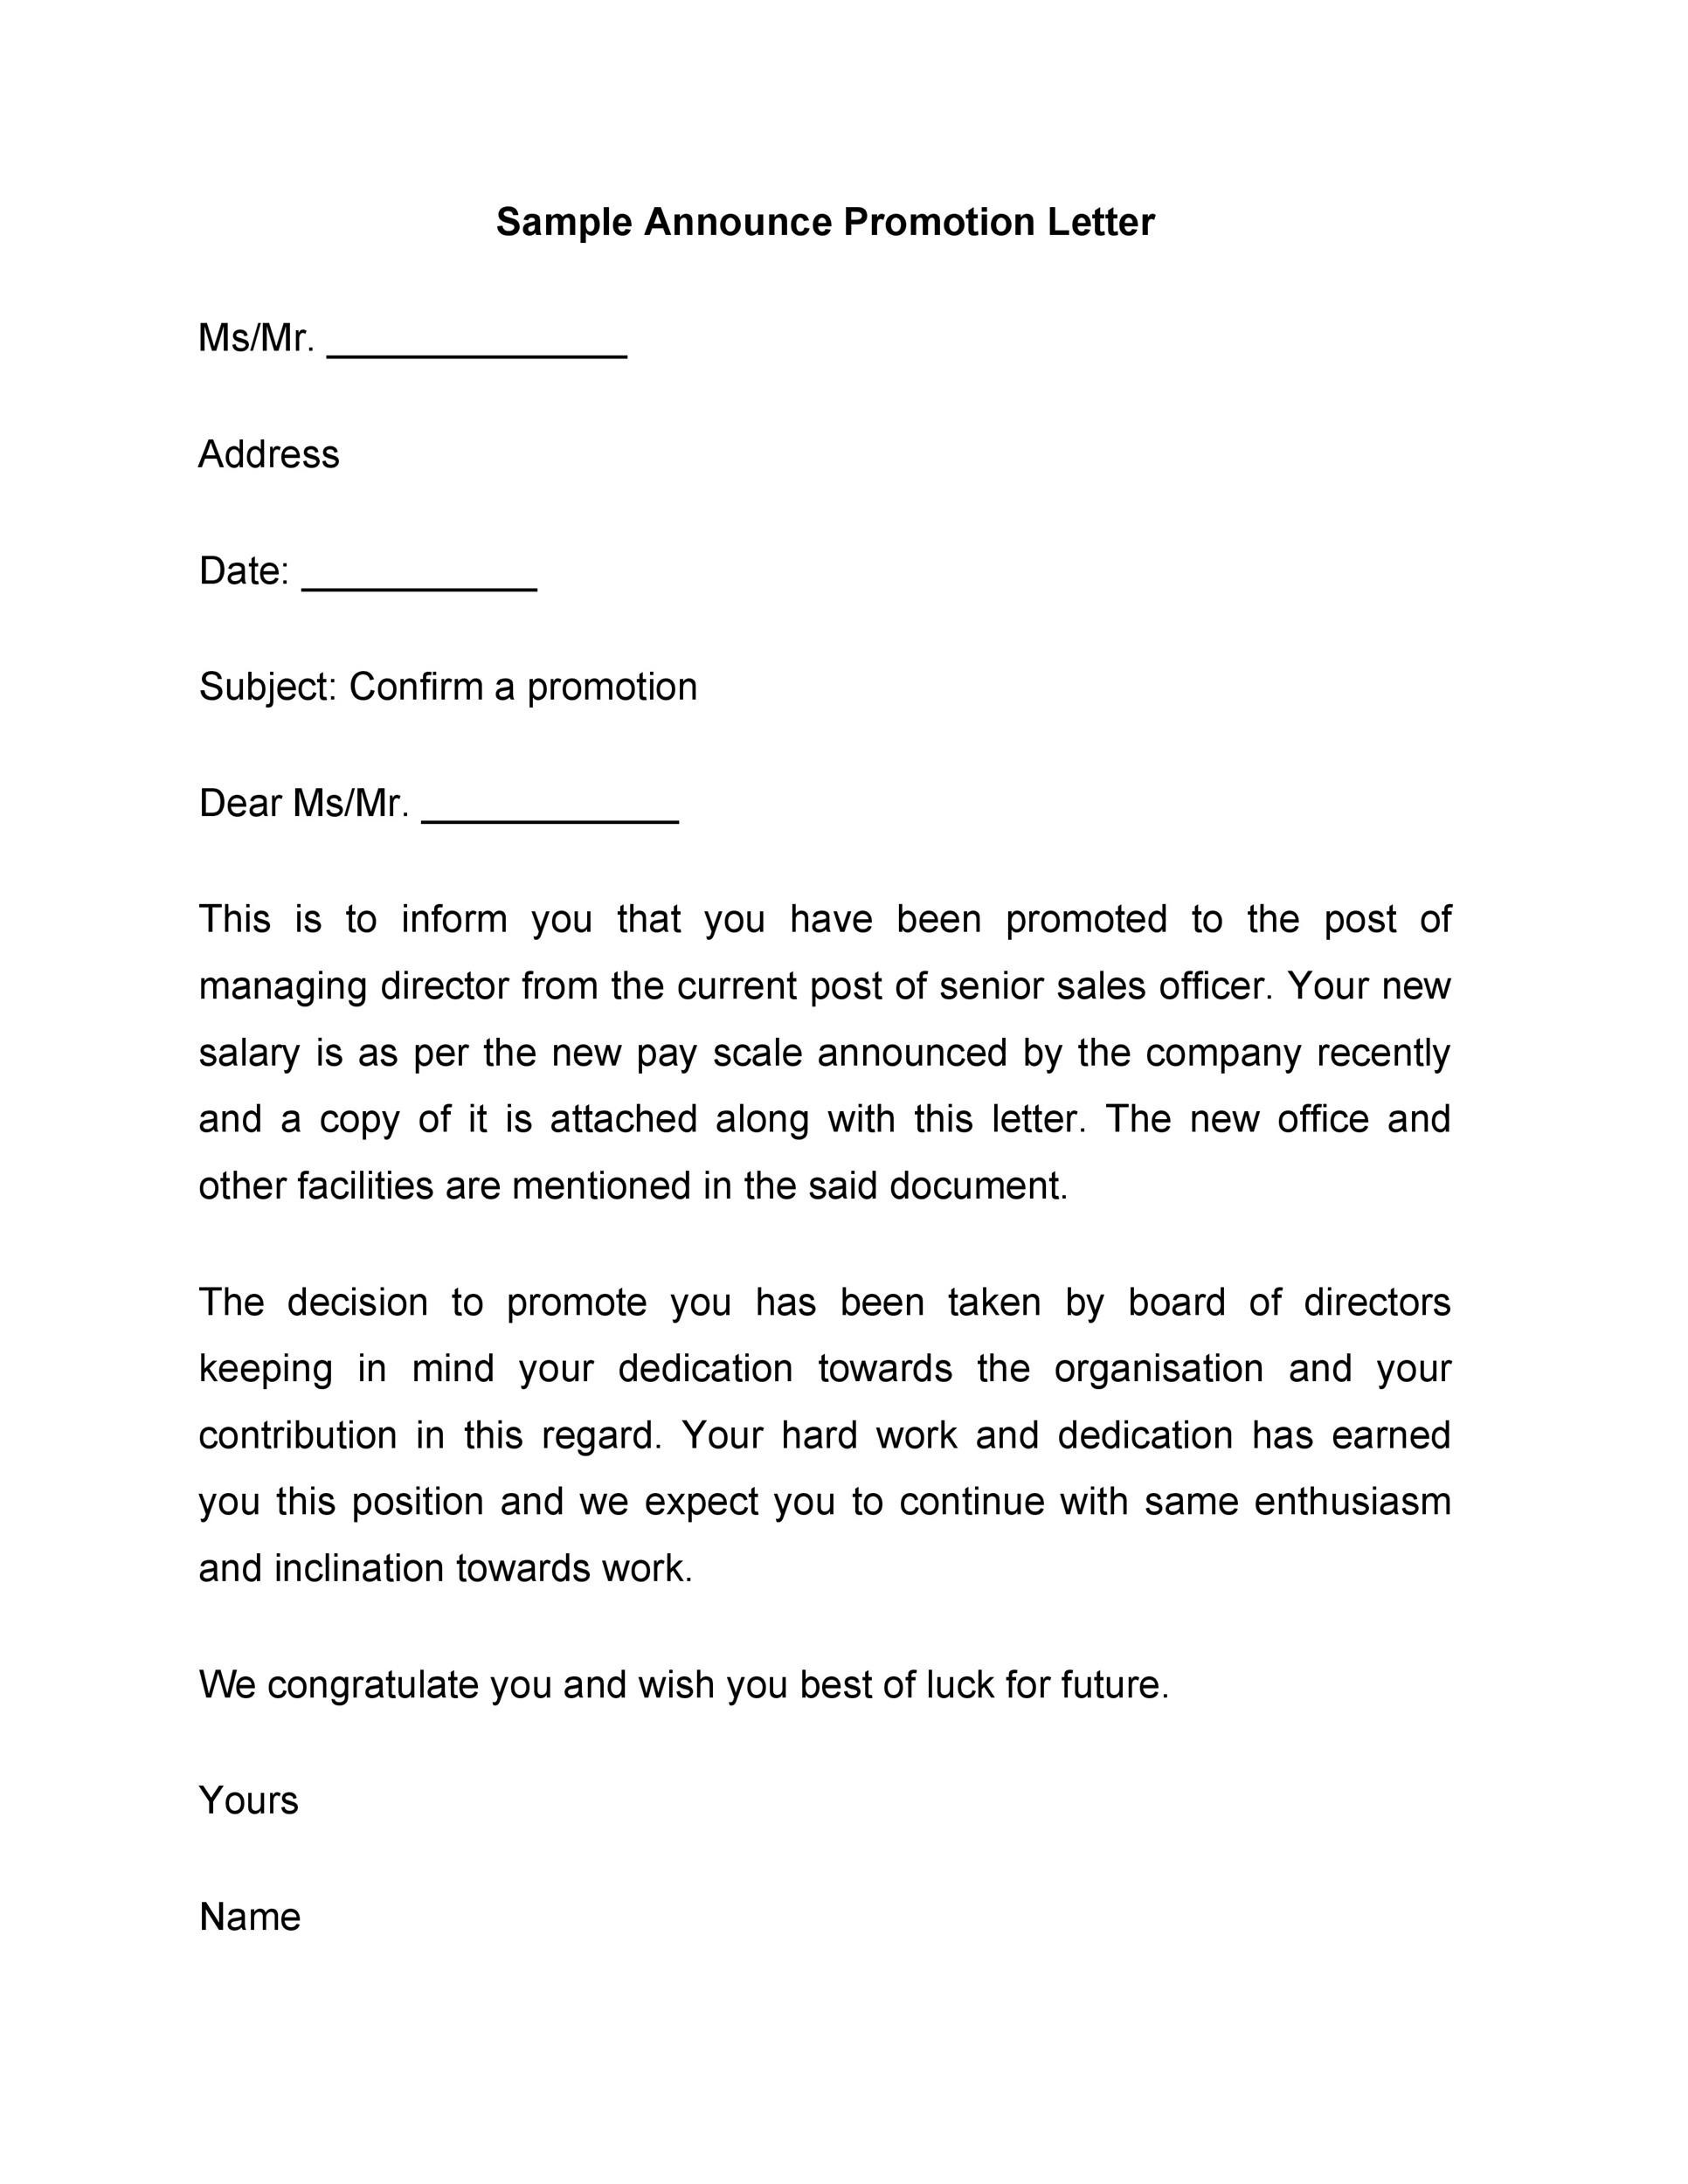 application letter for job promotion